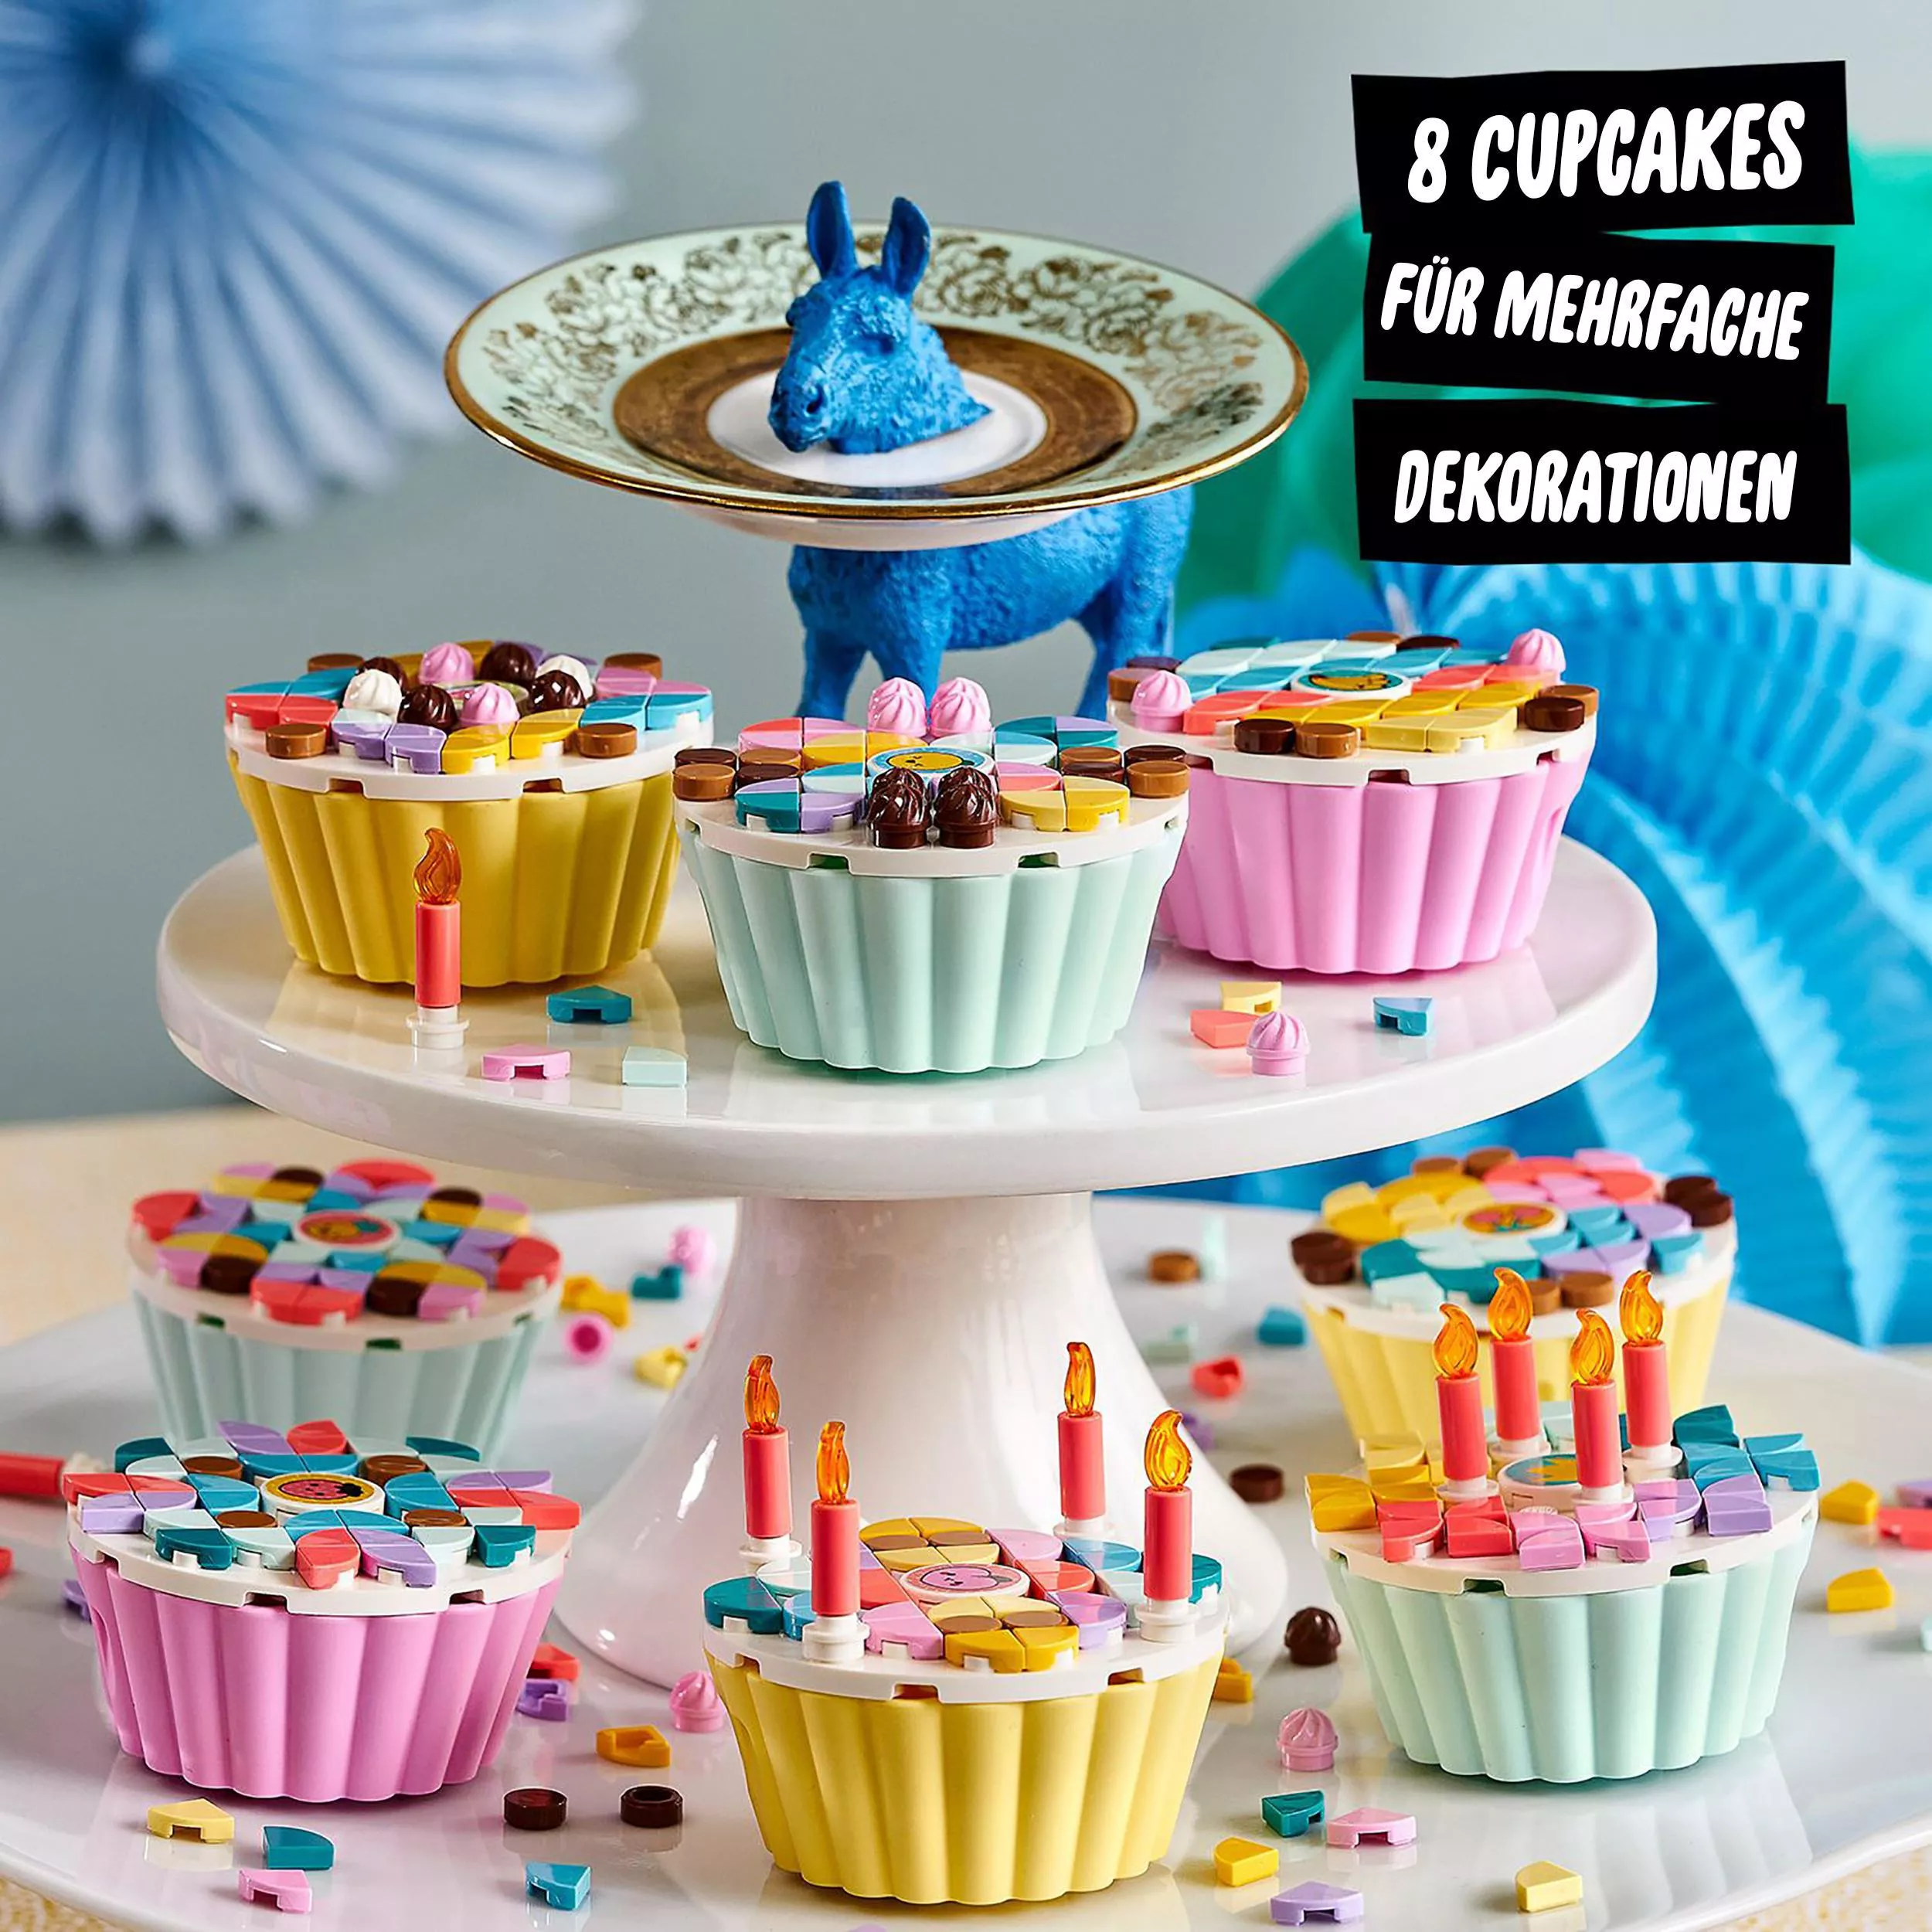 LEGO DOTS Cupcake Partyset